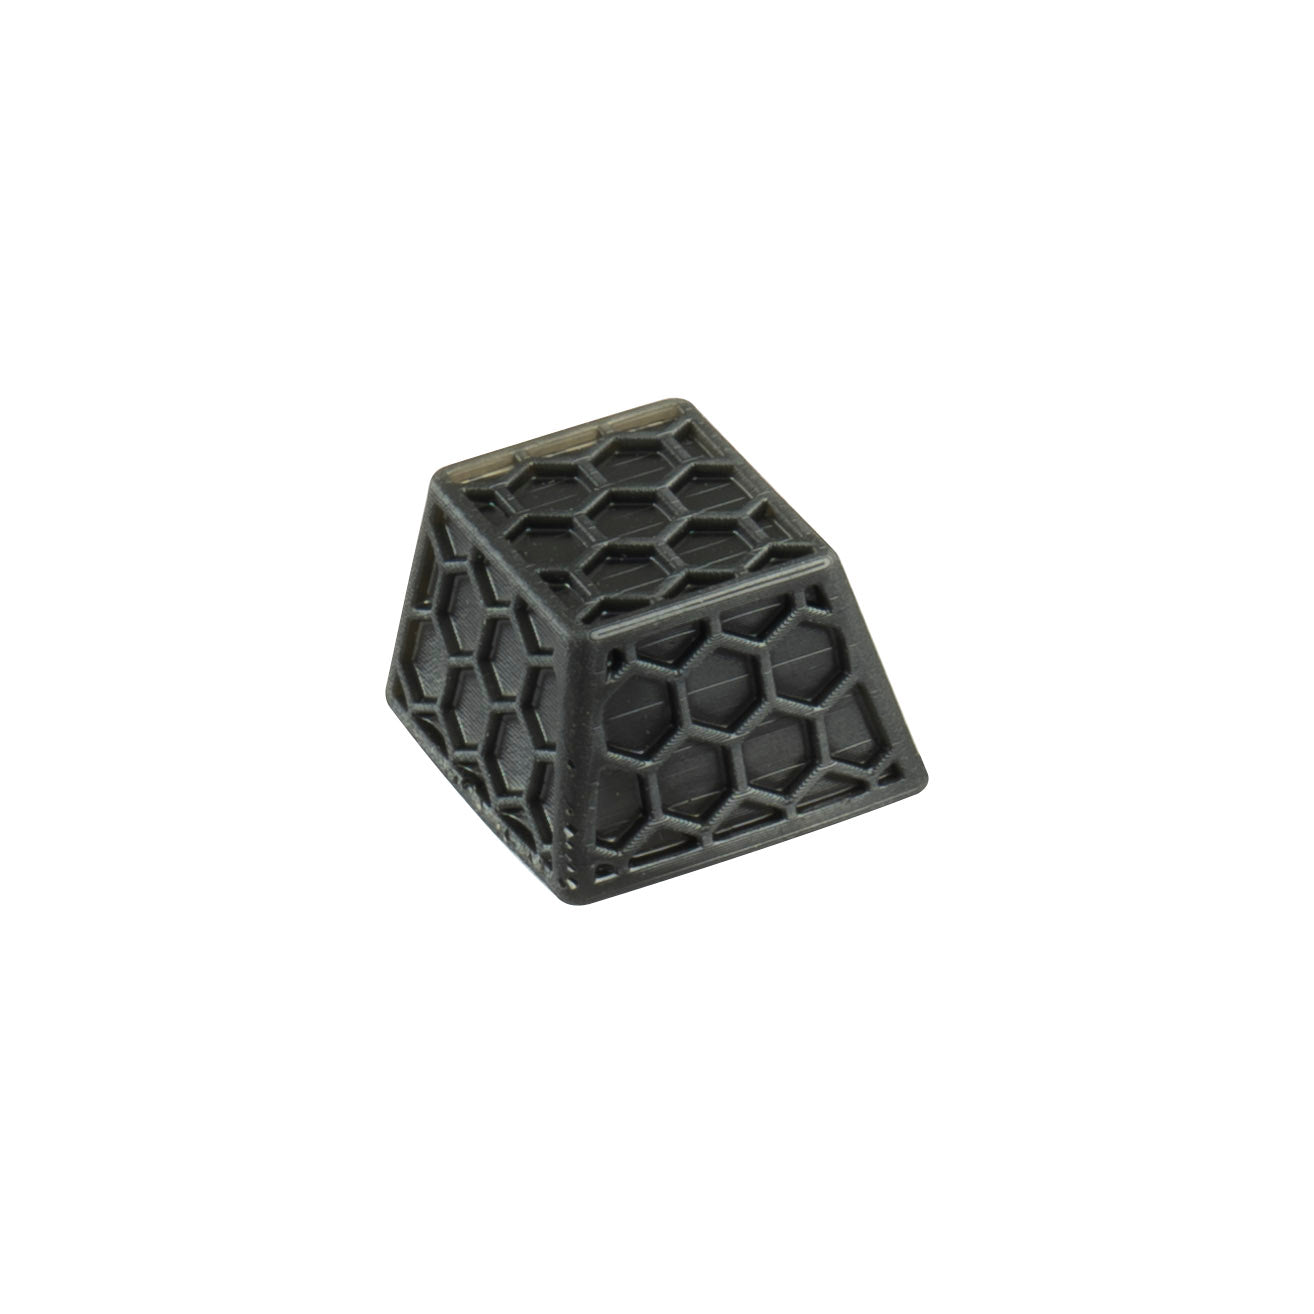 Capsmiths Hexcap 3D Printed Artisan Keycap MKFVX1IKR6 |27802|